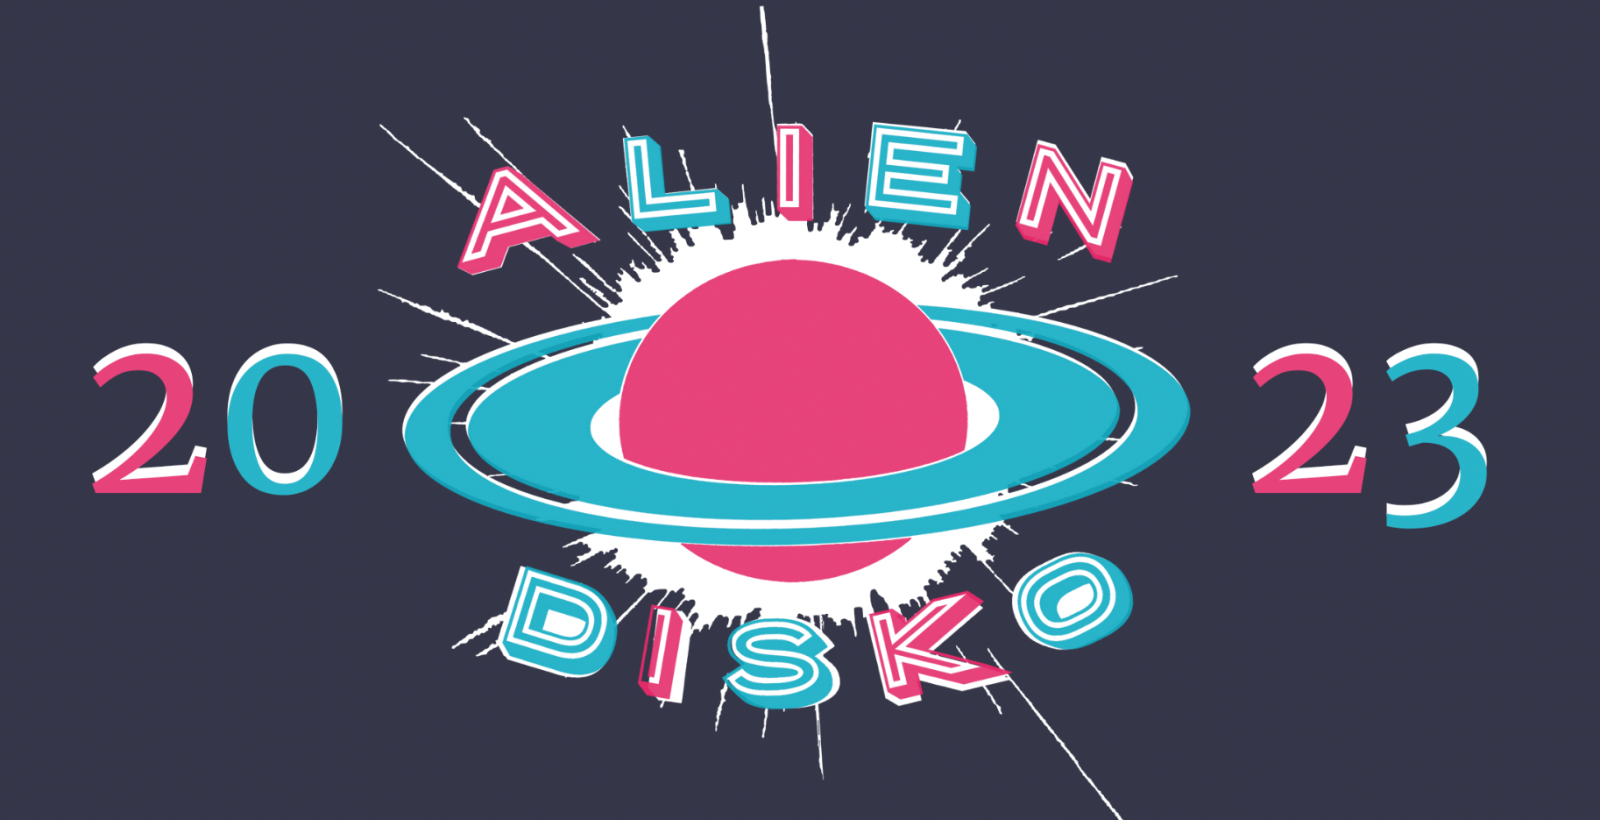 Alien Disko #5 